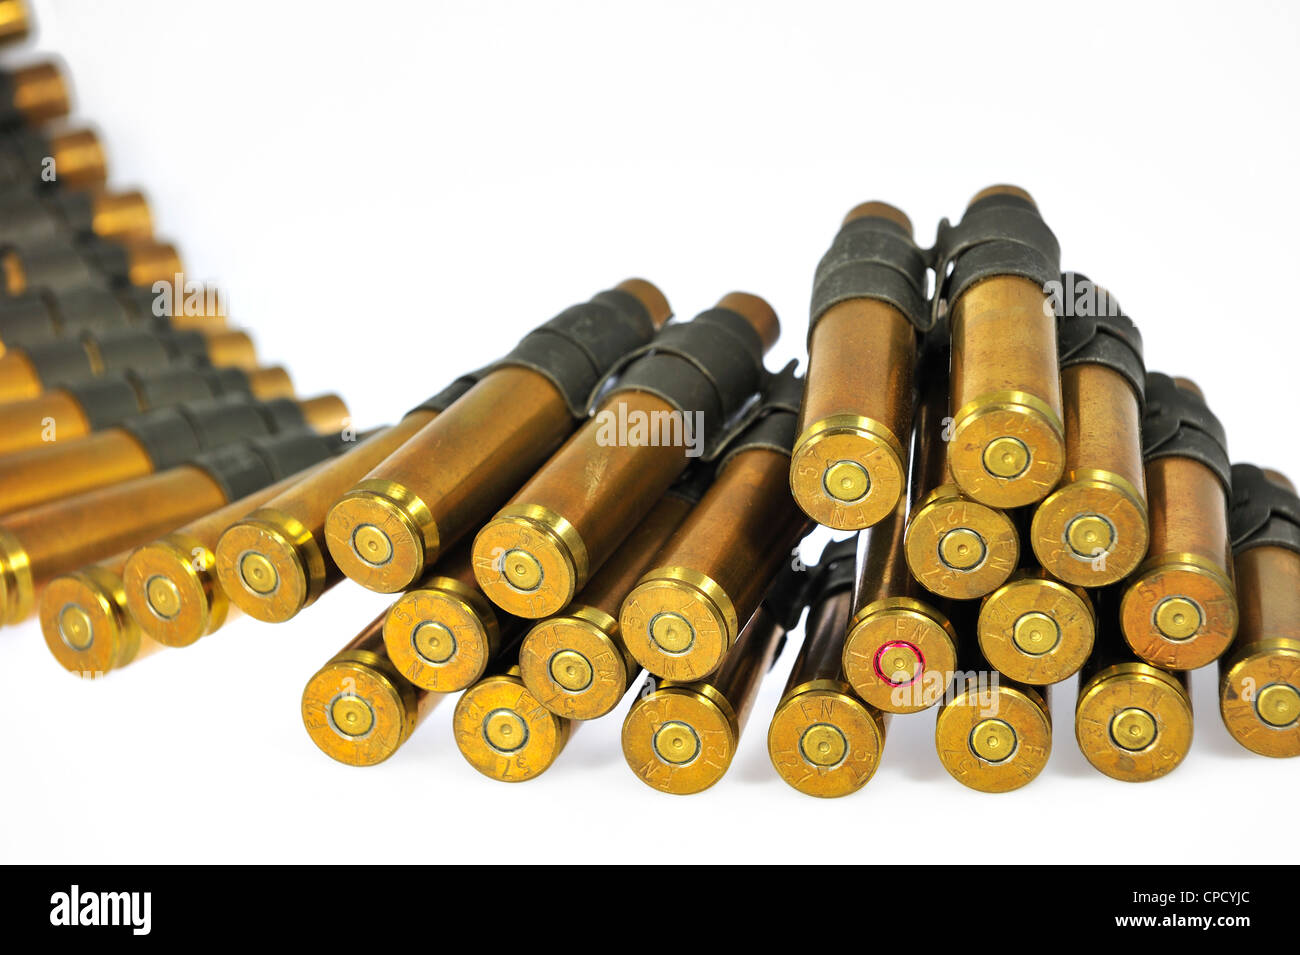 M2 Browning .50 caliber machine gun cartridges in ammunition belt made by FN Herstal weapon factory in Belgium Stock Photo